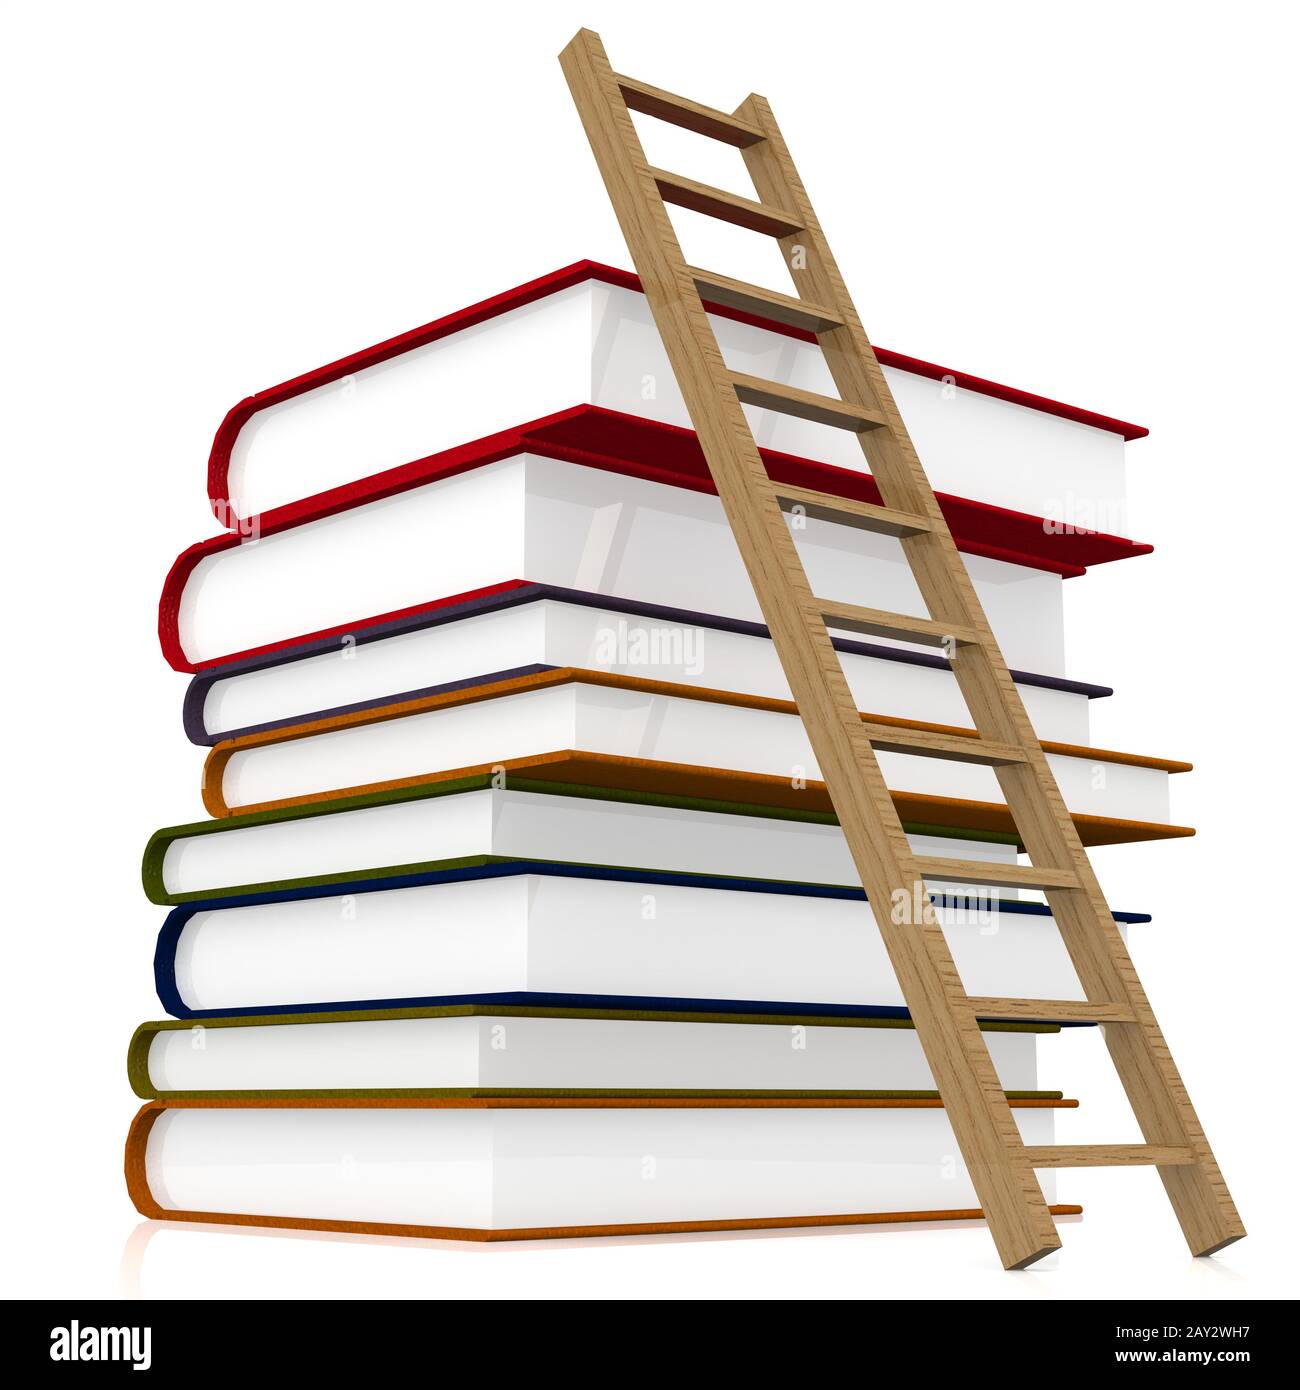 Book step. Лестница из книг на белом фоне. Фон ступеньки из книг. Ступени из книг символ. Лестница заниния книги.